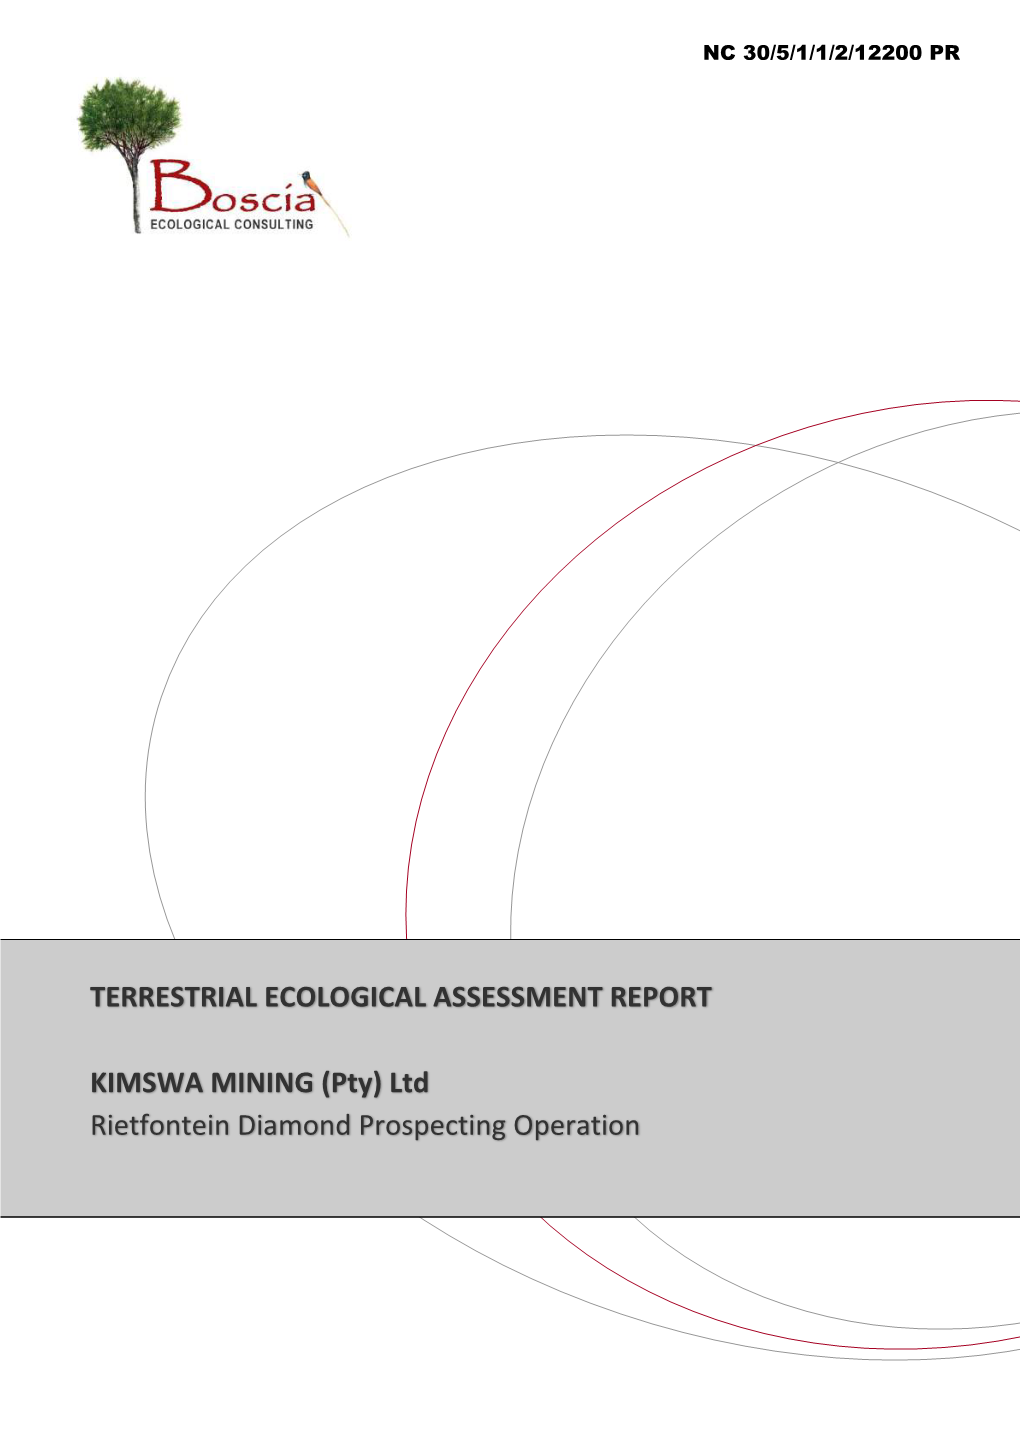 Terrestrial Ecological Assessment Report Kimswa